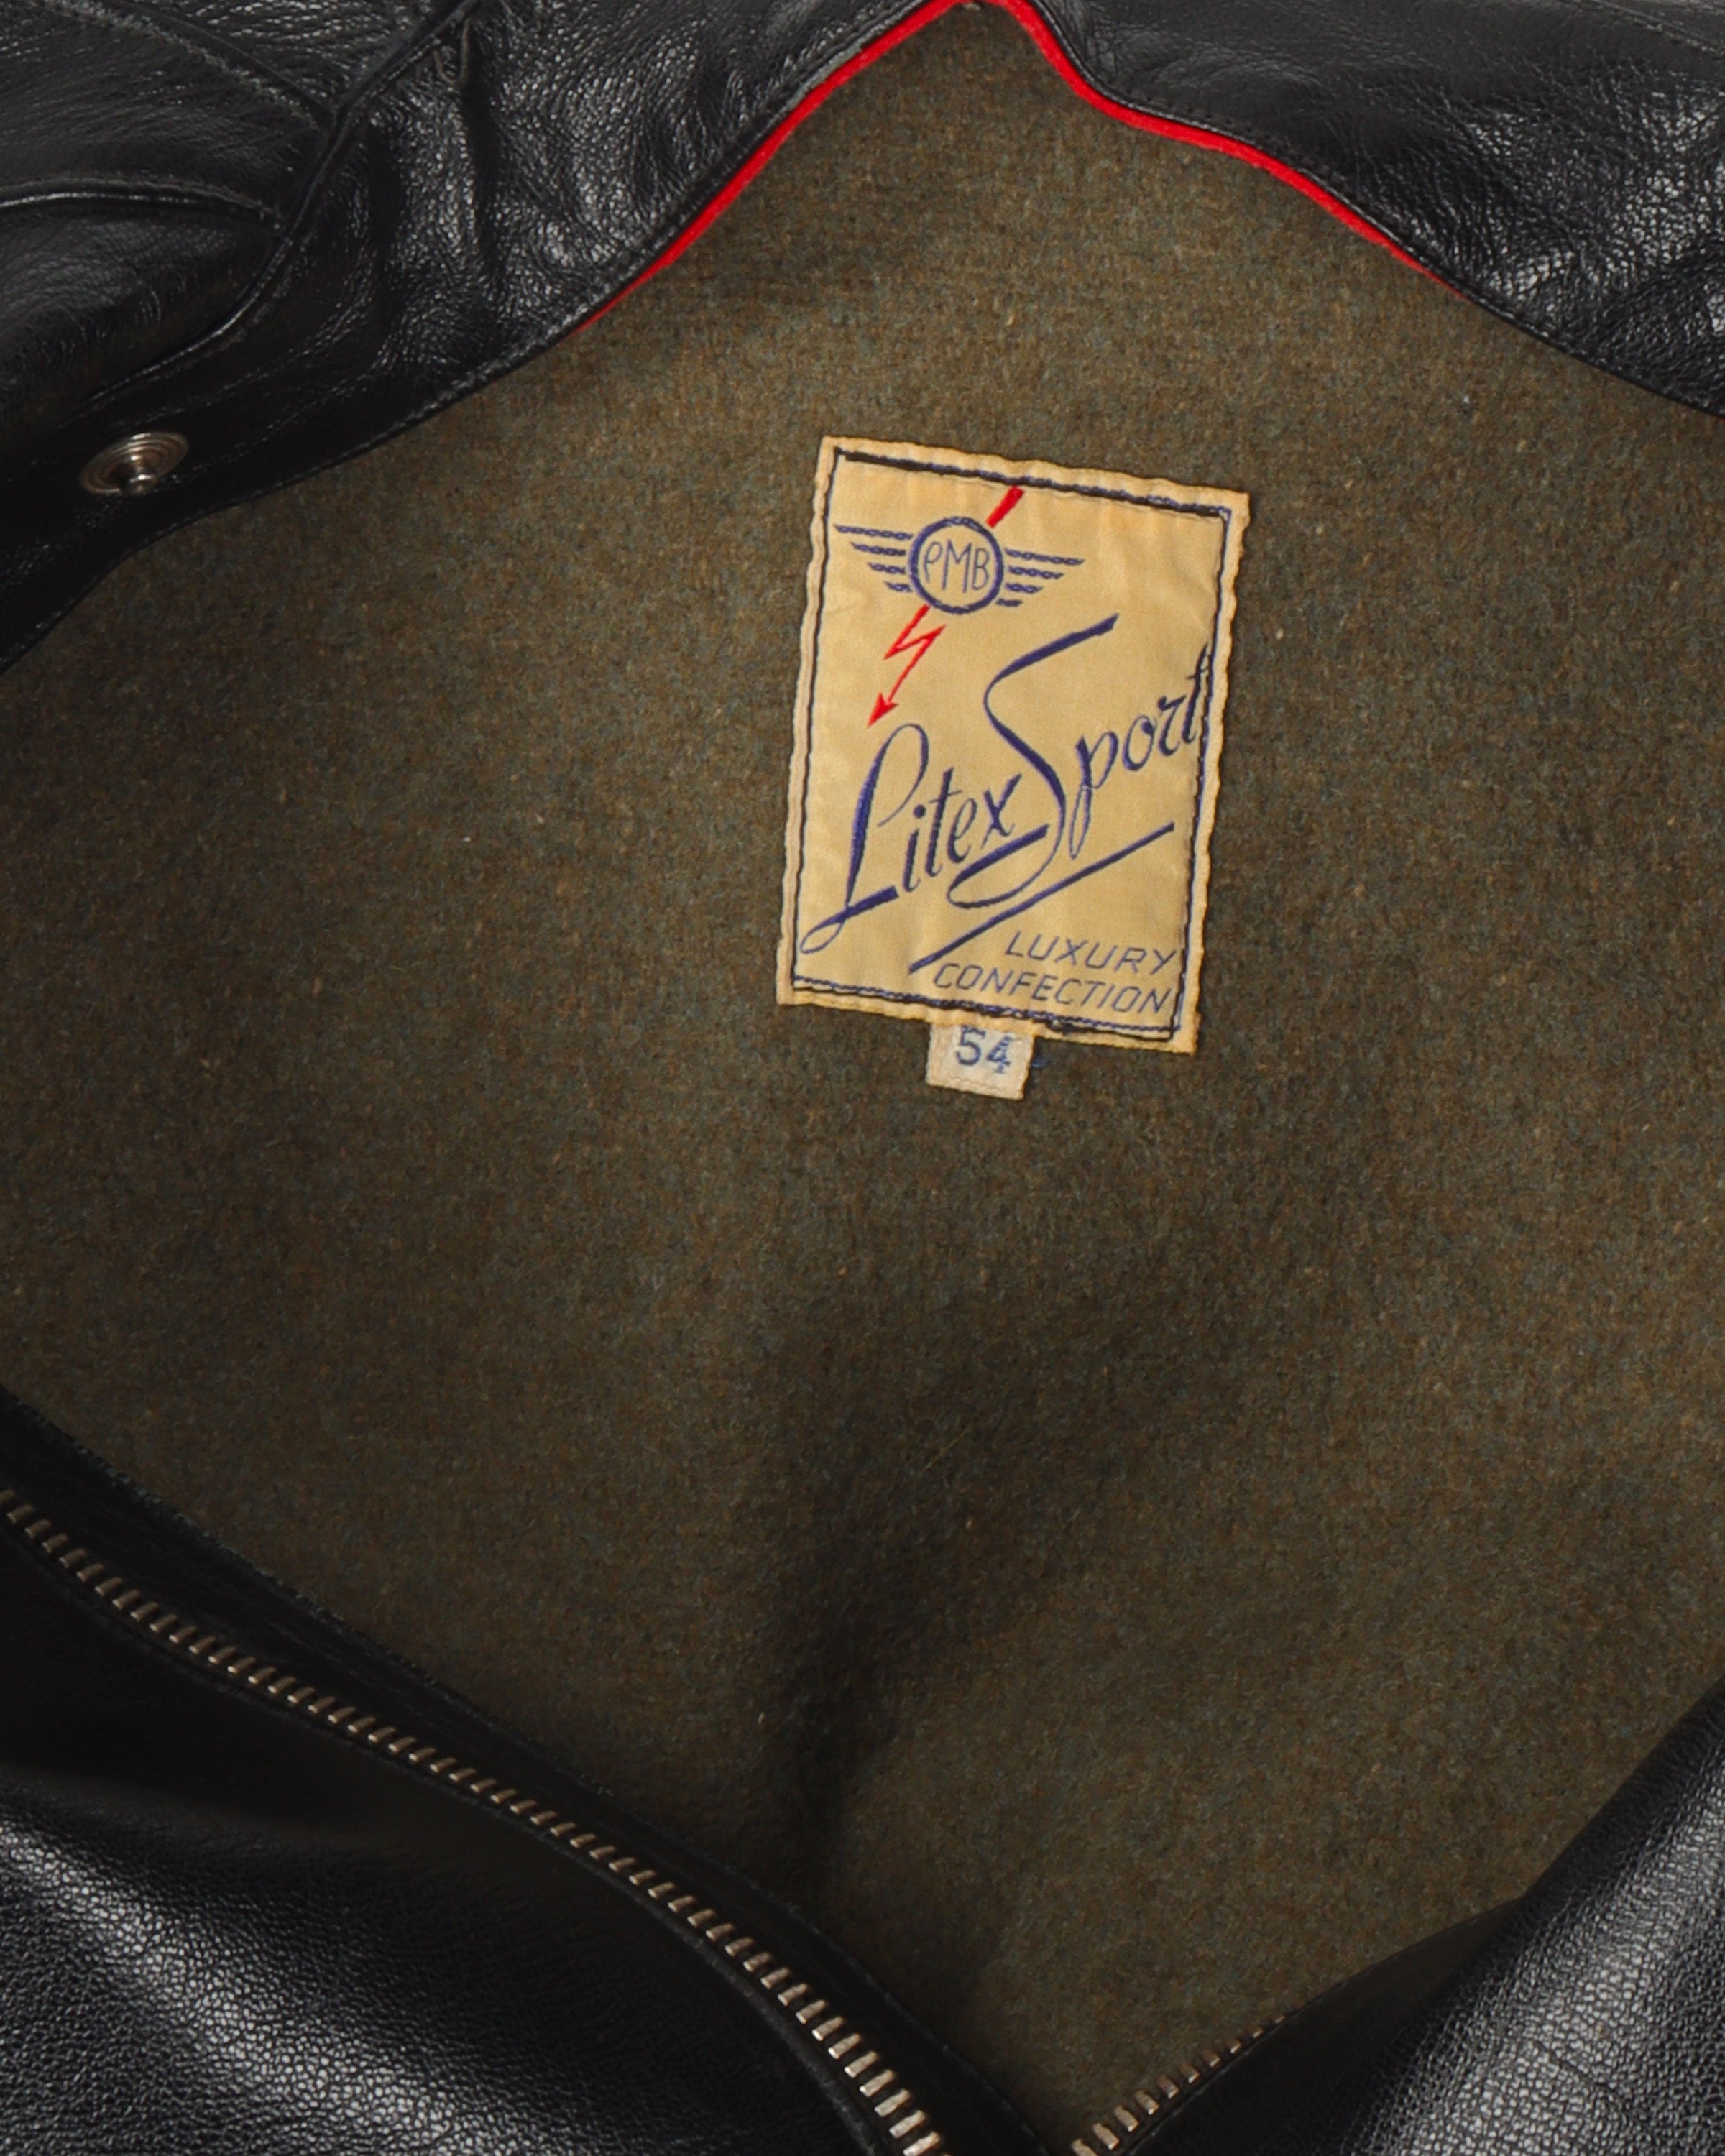 1960s Litex Sport Cafe Racer Leather Jacket